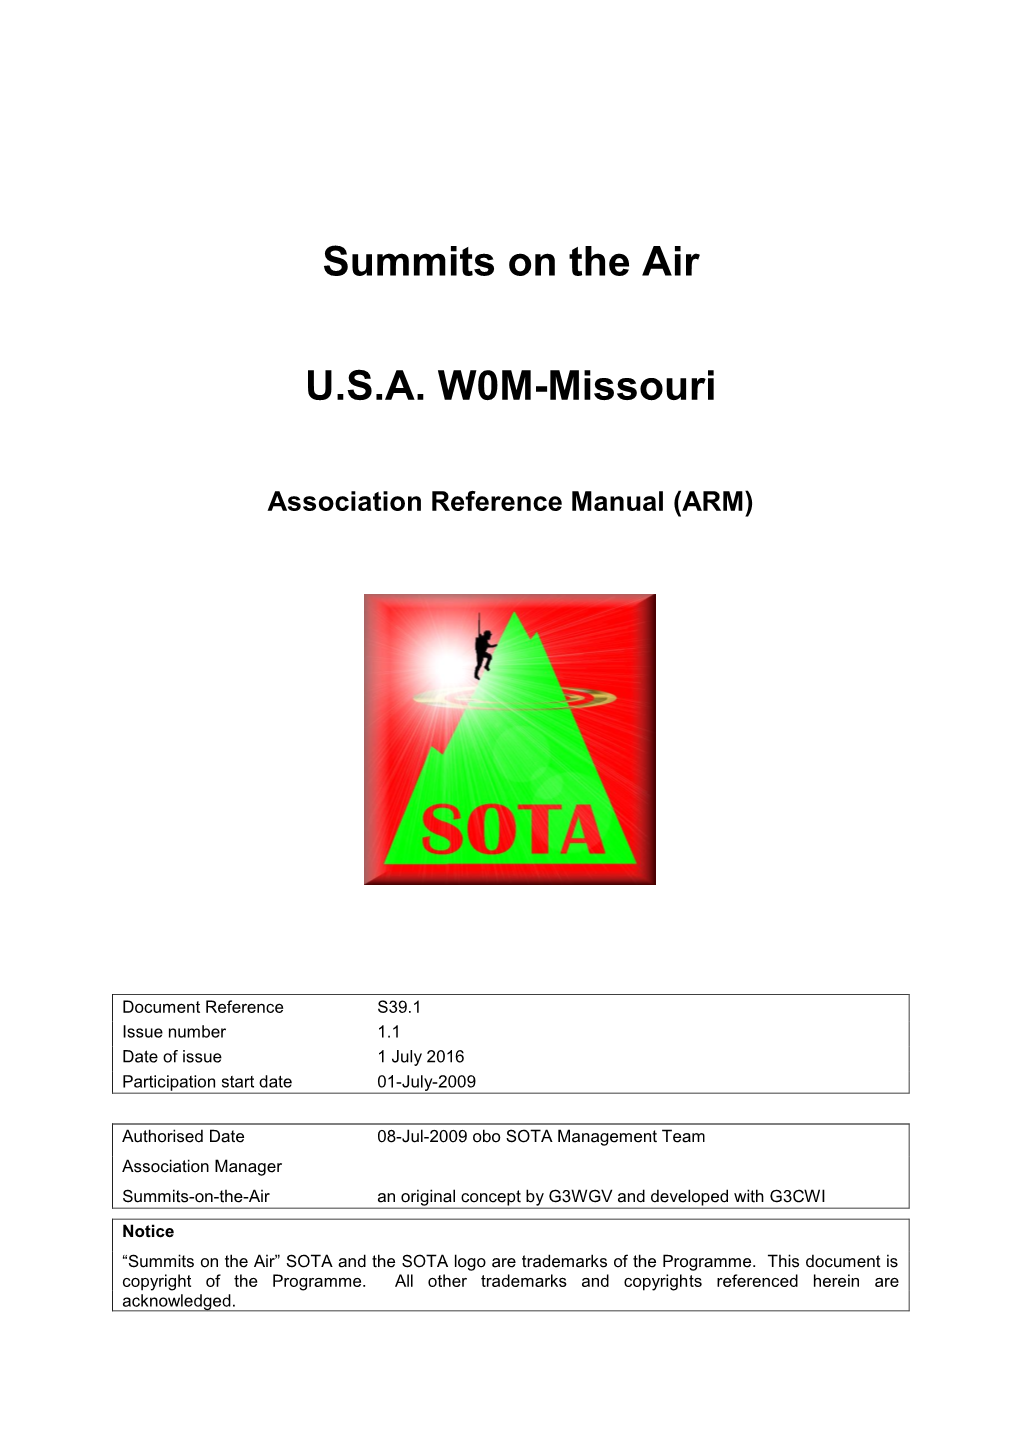 Summits on the Air USA W0M-Missouri Association Reference Manual